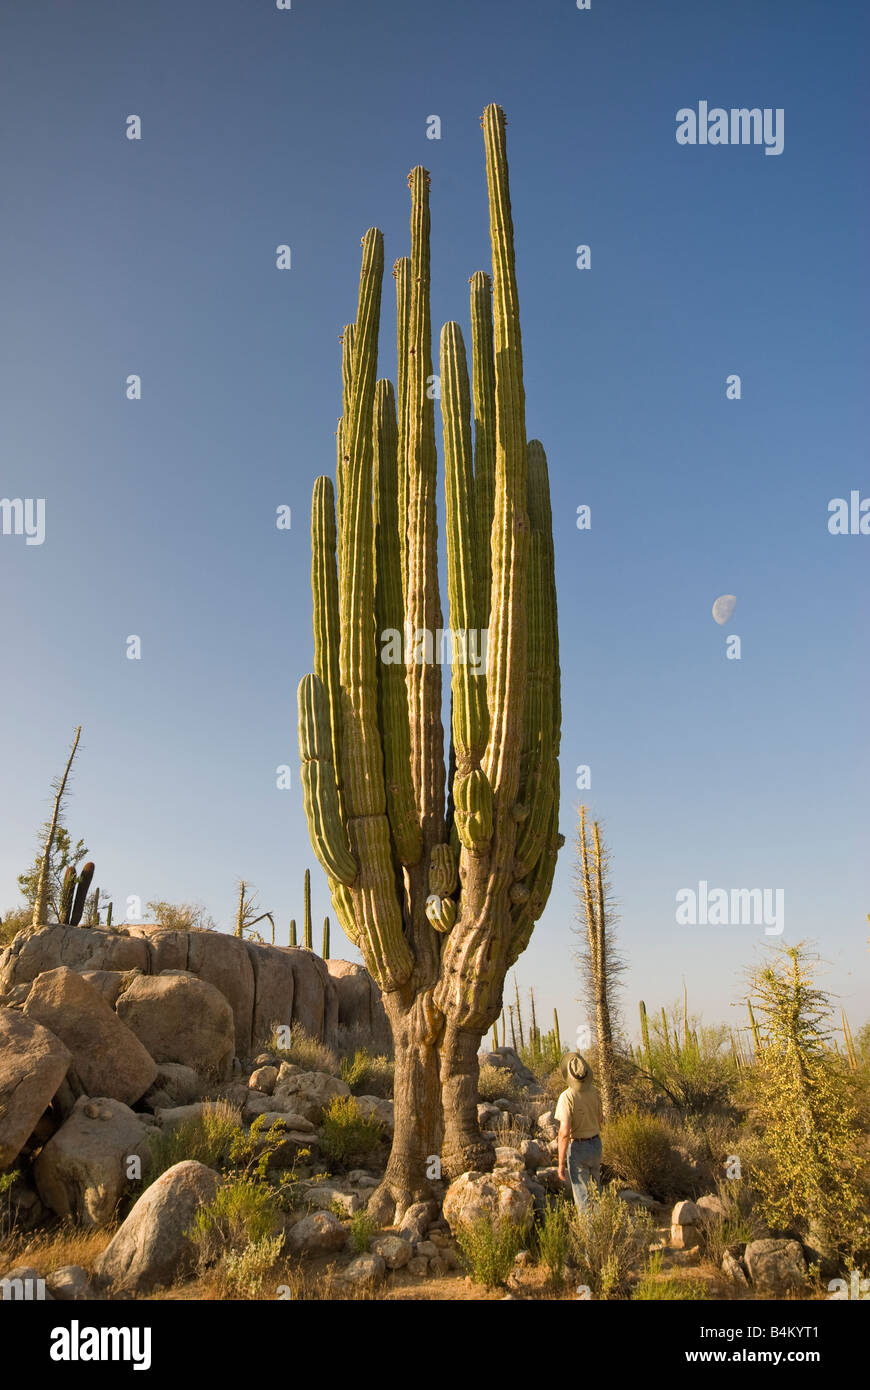 Man looking at cardon cactus, Desierto Central near Catavina in Baja California Mexico Stock Photo